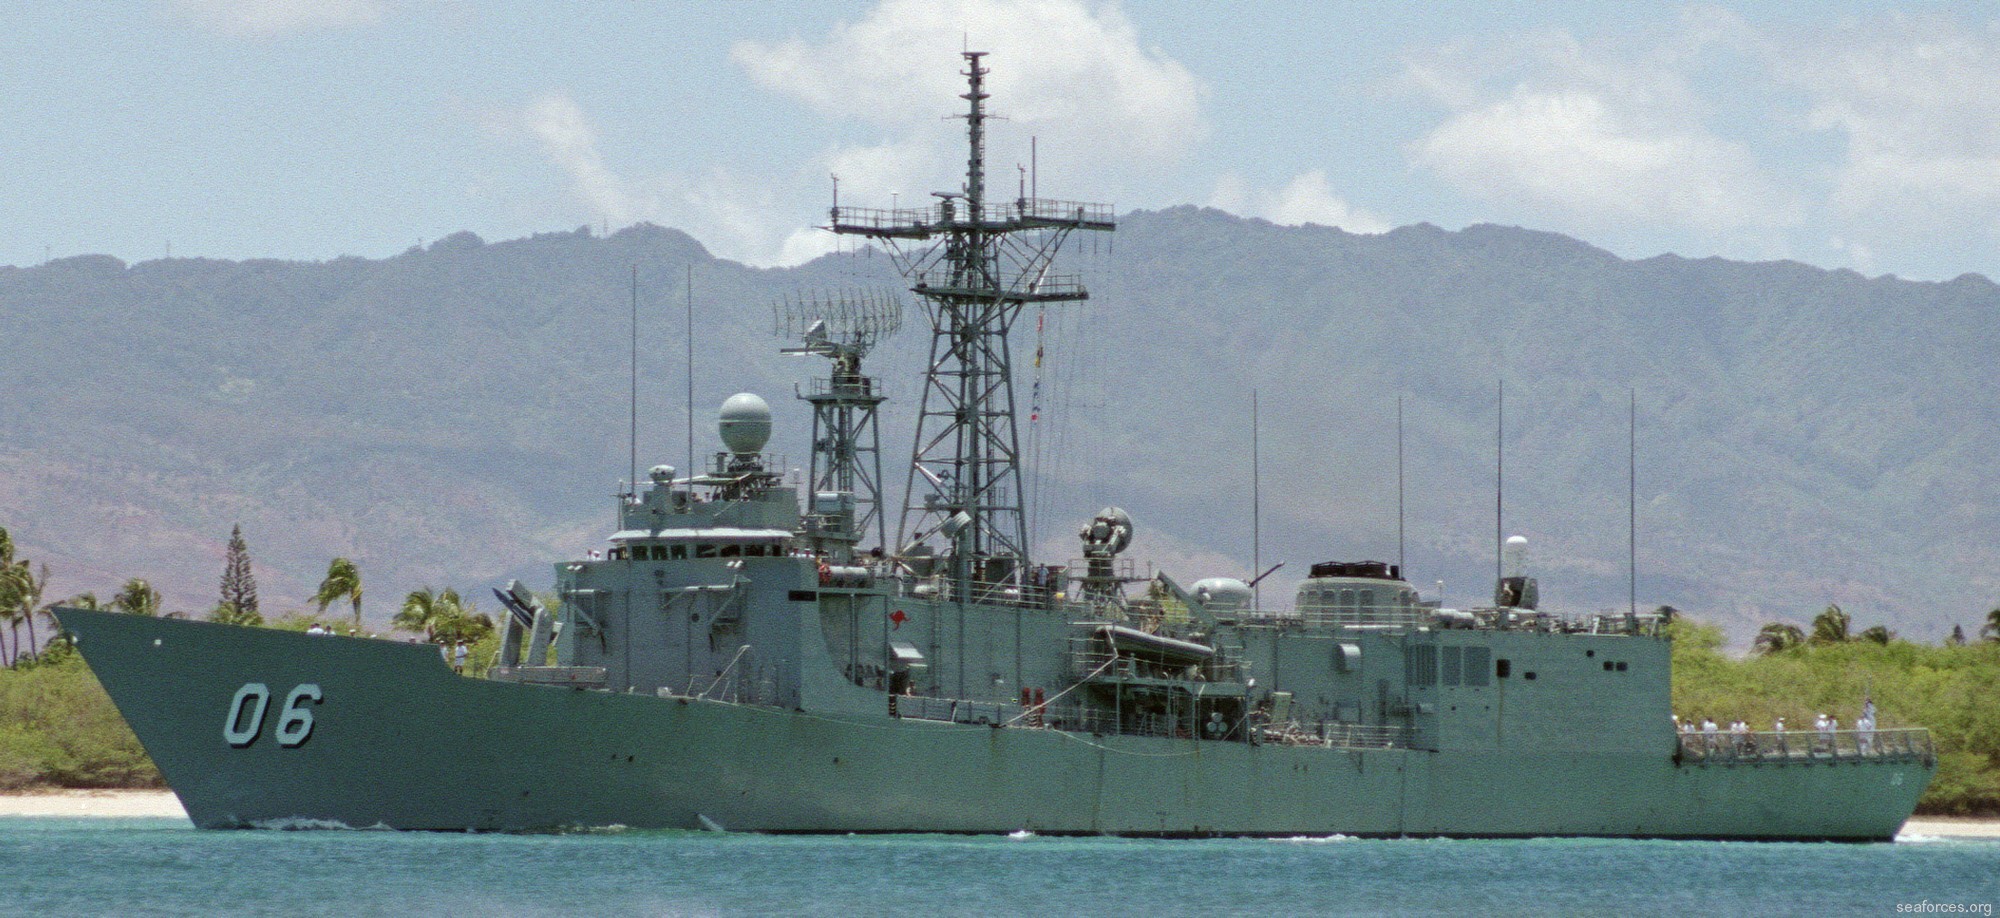 ffg-06 hmas newcastle adelaide class frigate royal australian navy 2000 25